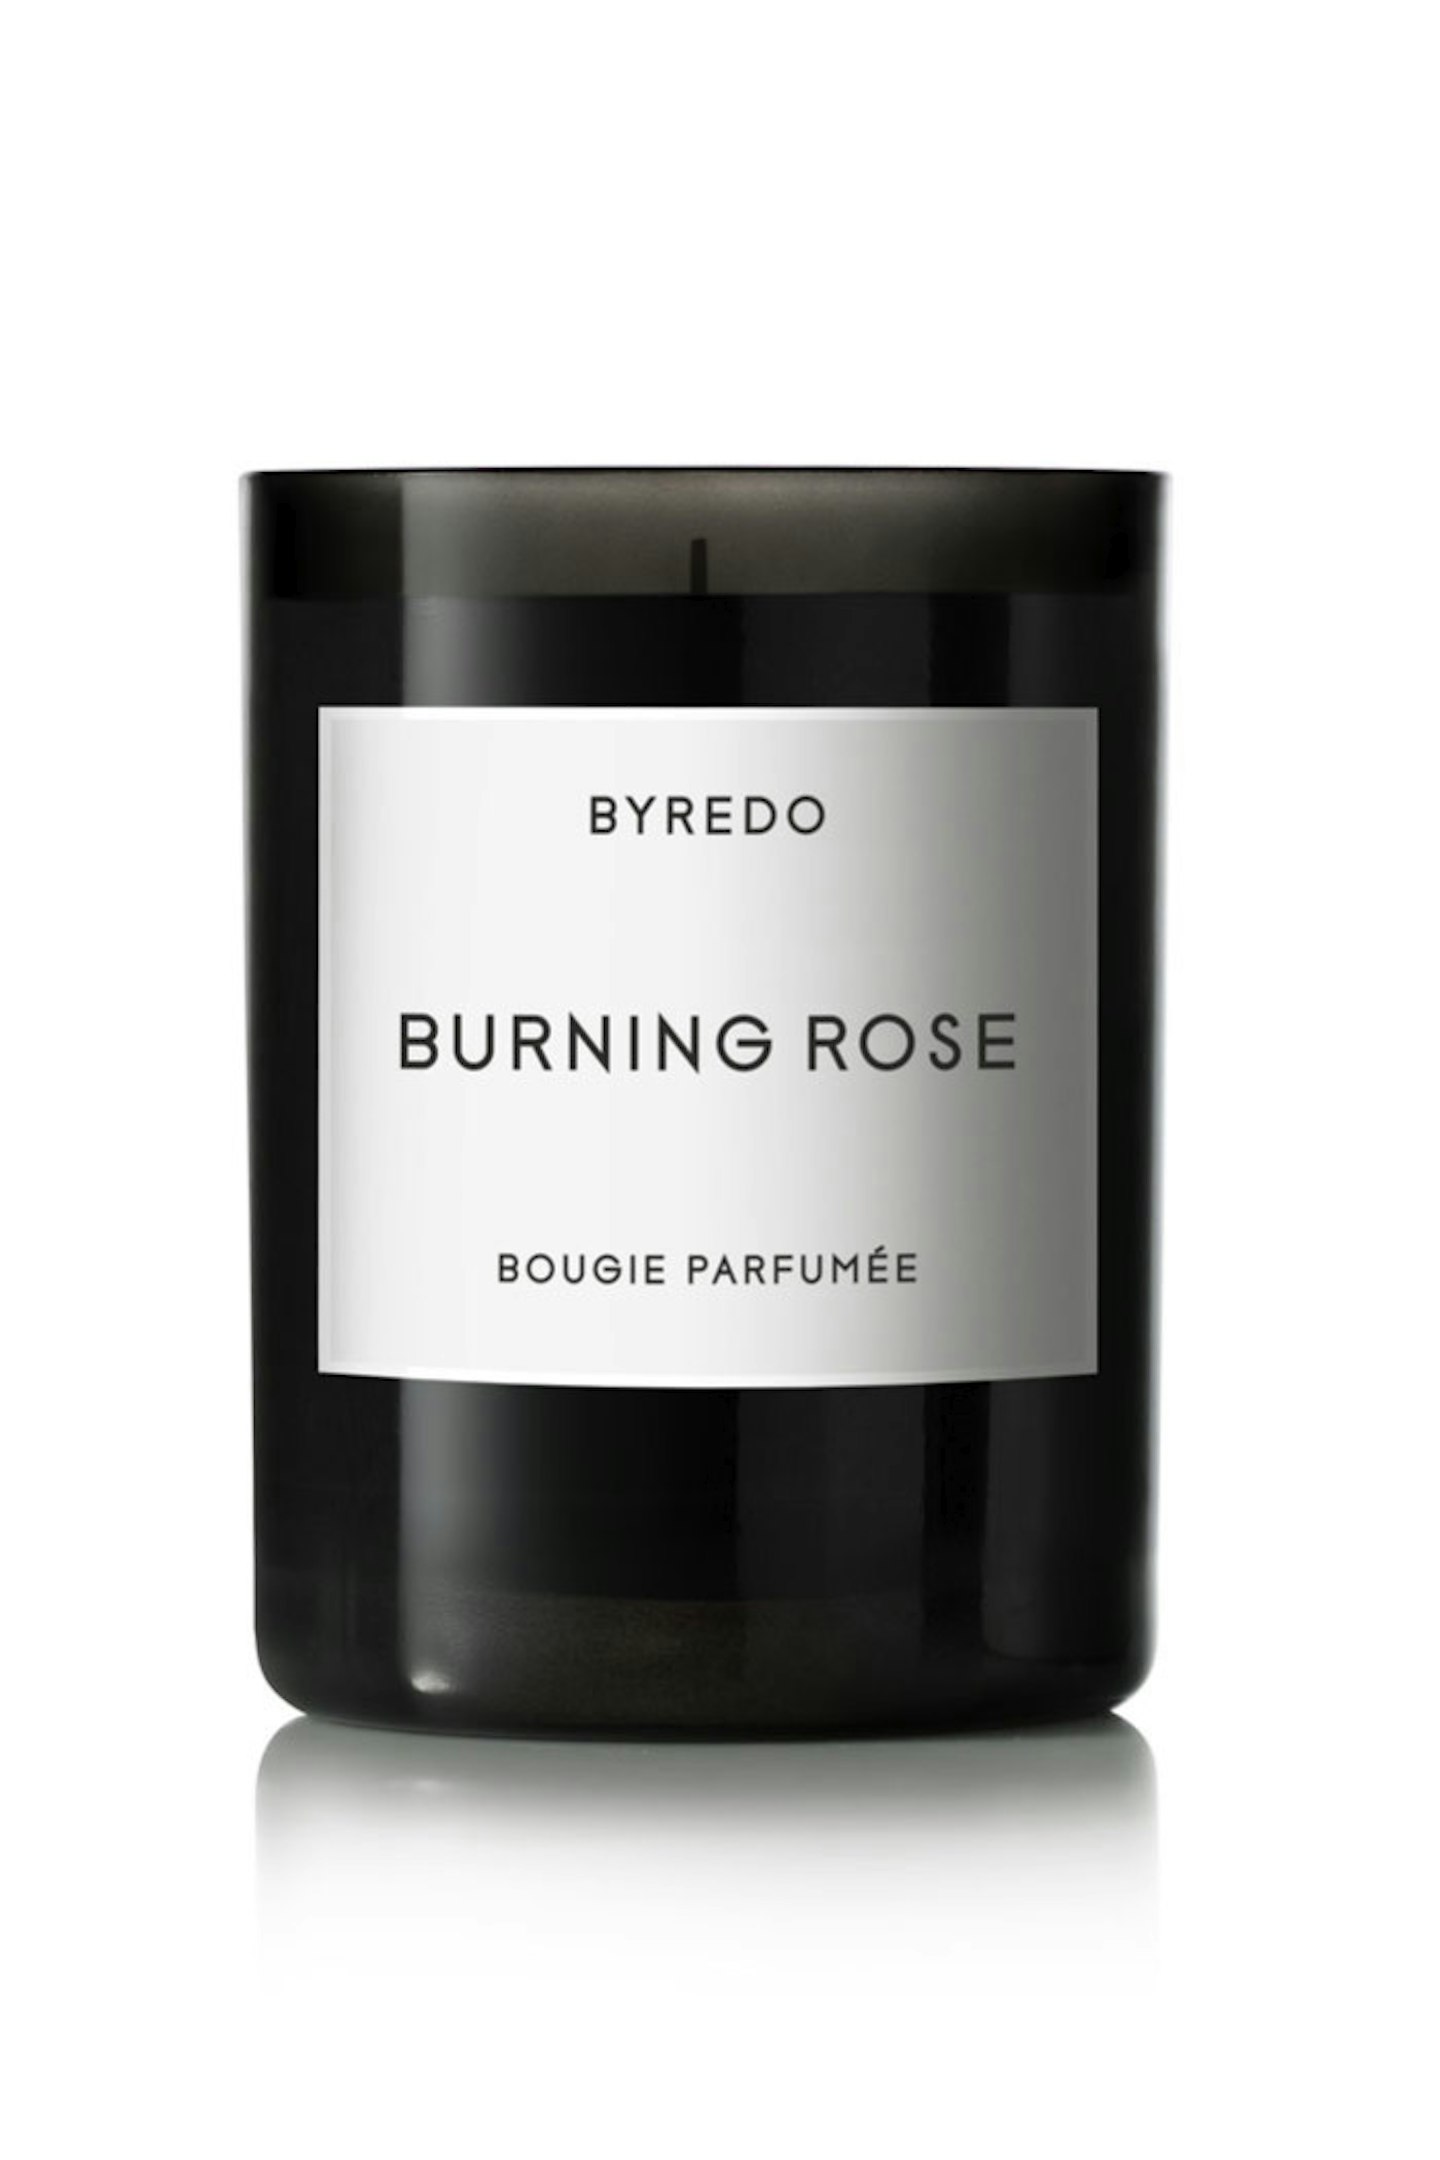 Byredo Parfums Burning Rose Candle, from £23.00